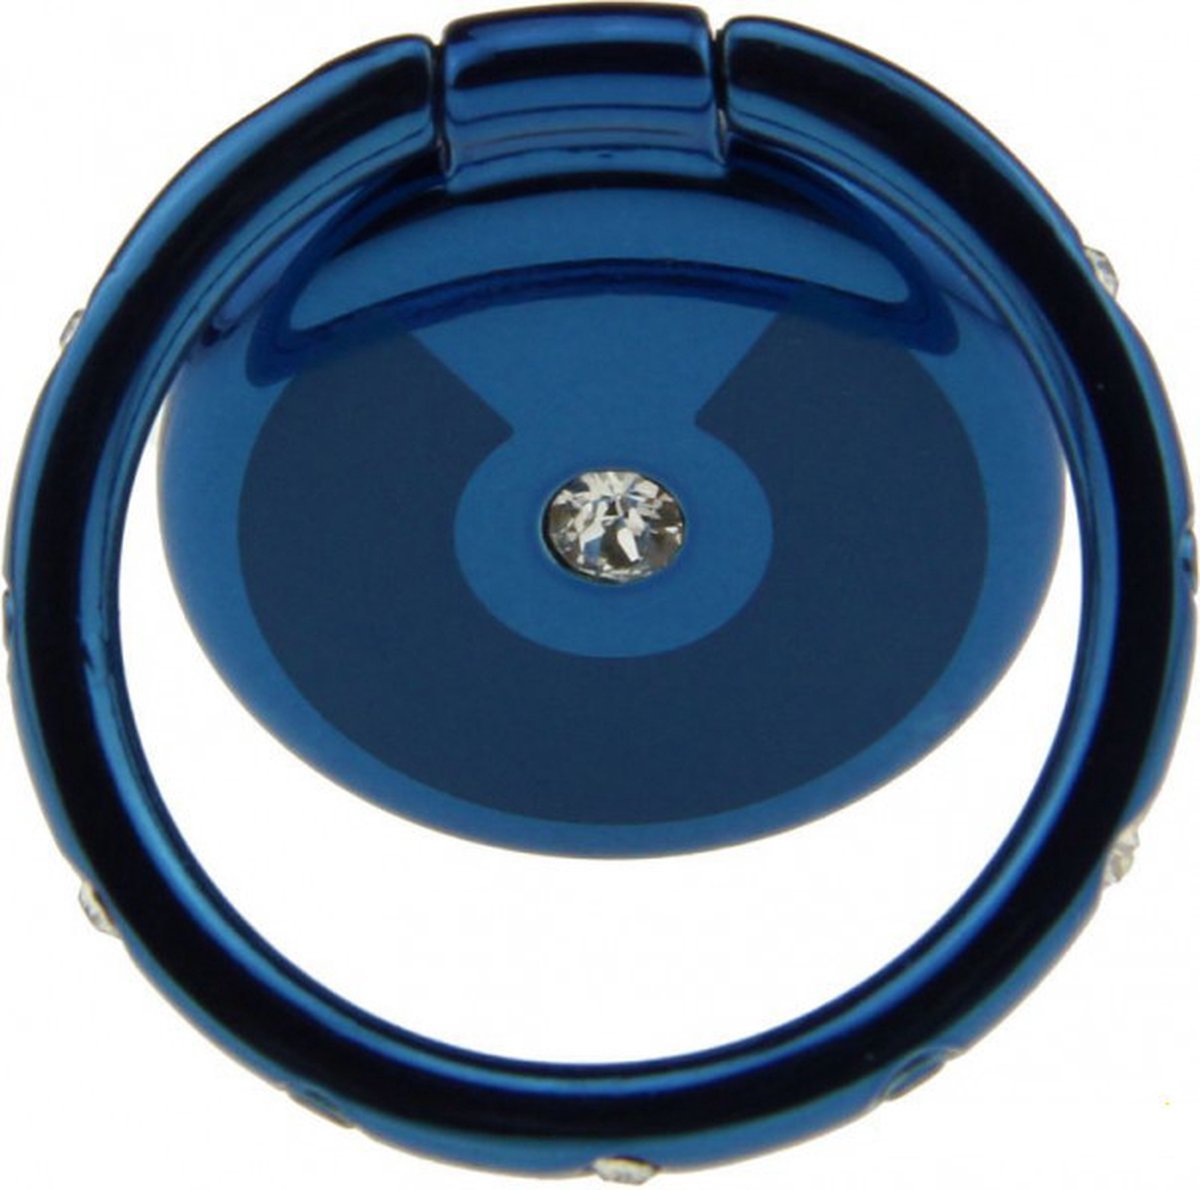 USAMS Diamond Encrusted Ring Holder - Blauw